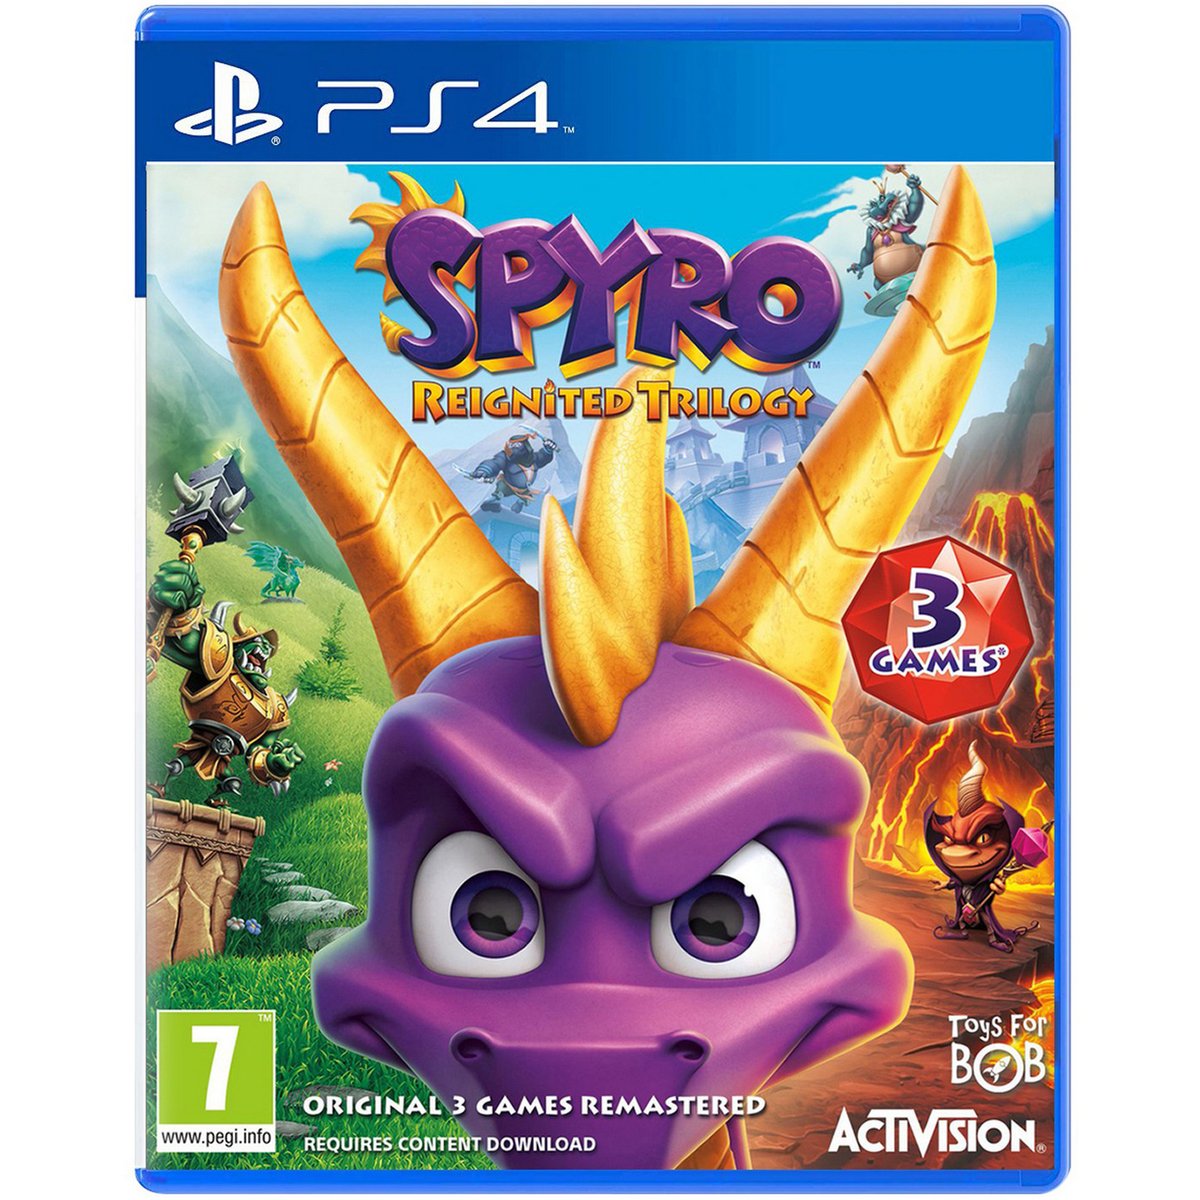 PS4 Spyro: Reignited Trilogy